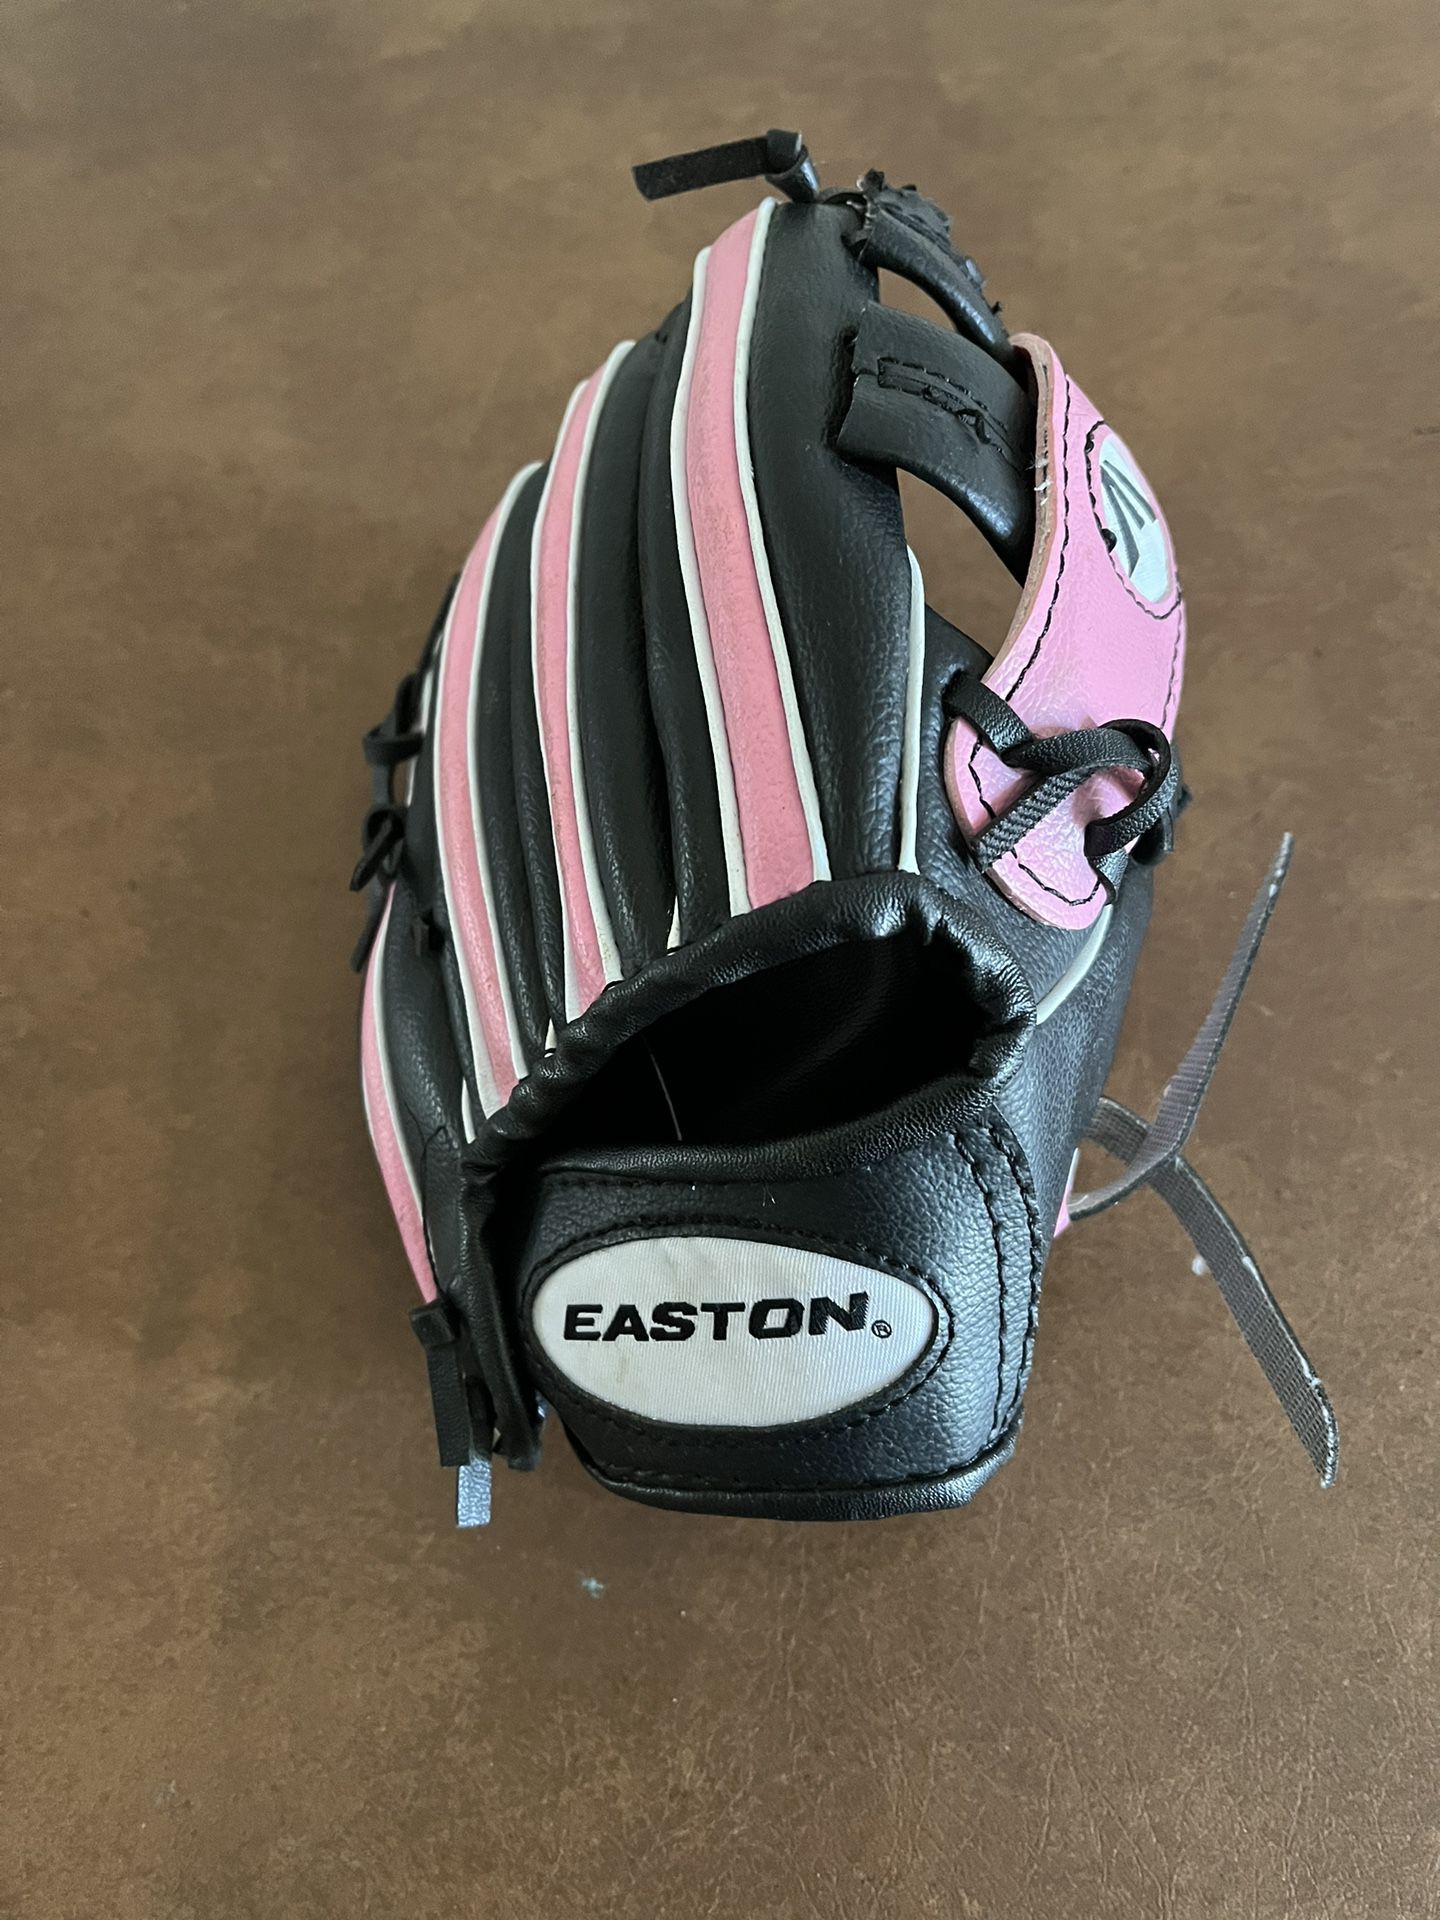 Easton Girls Pink & Black Baseball Glove